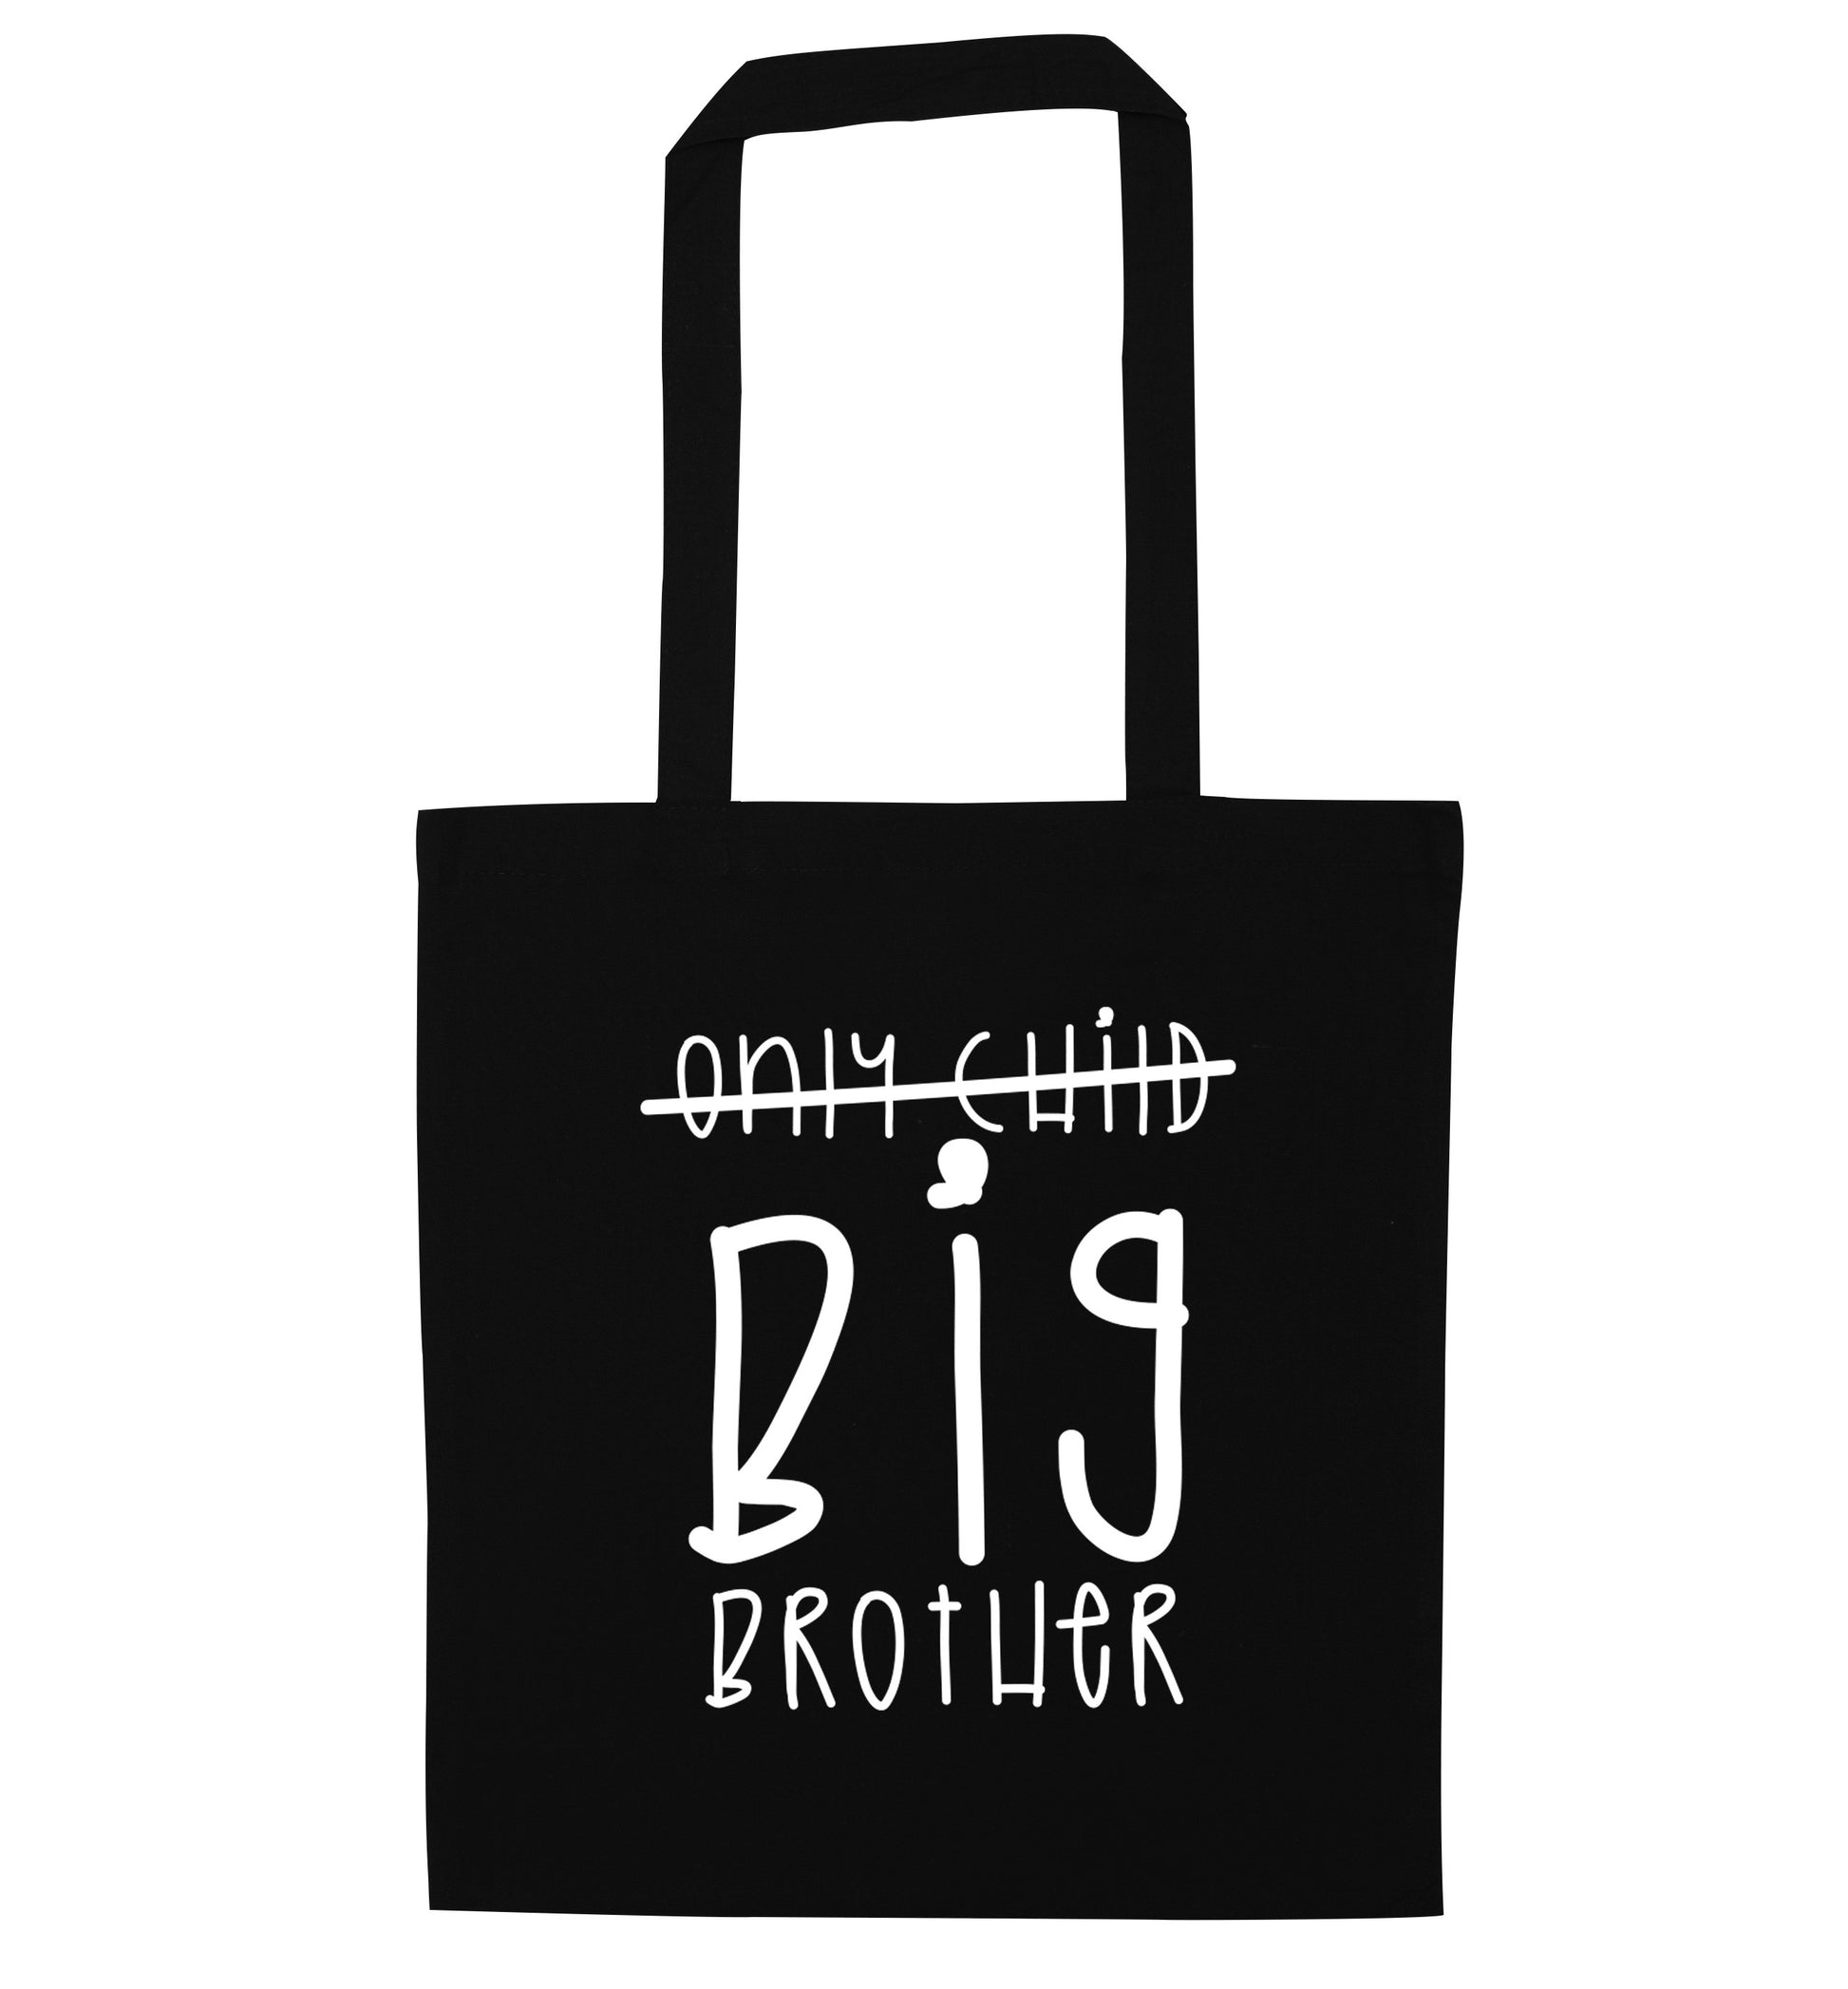 Only child big brother black tote bag